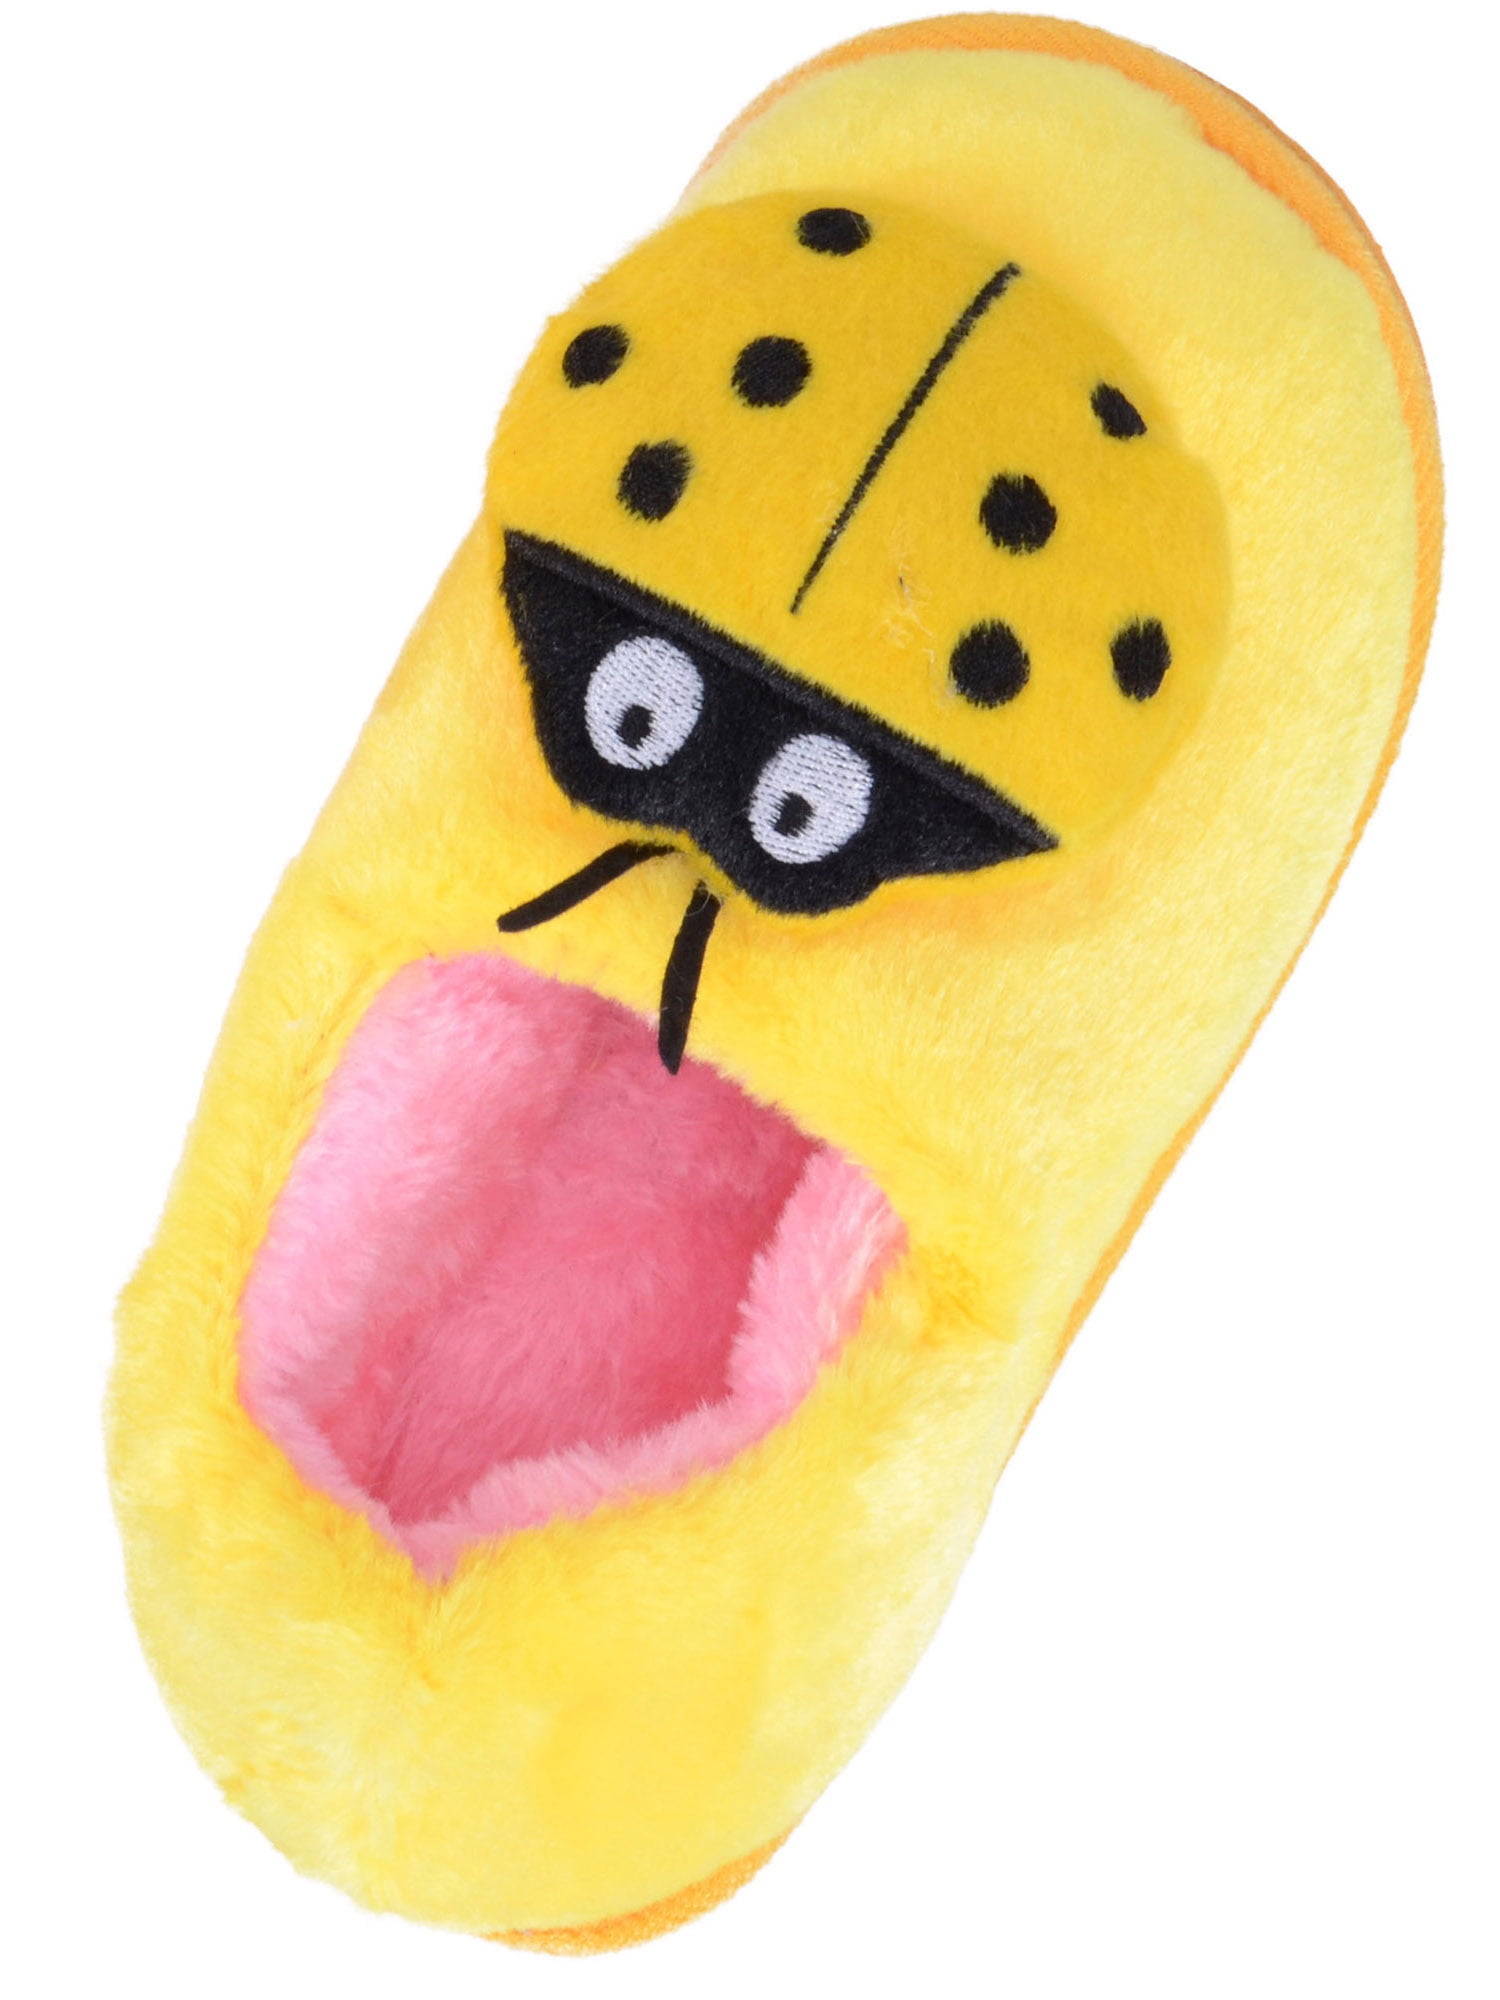 Kids Emoji Plush Stuffed Unisex Home Indoor Slipper Shoes Size S kids US 8-9 